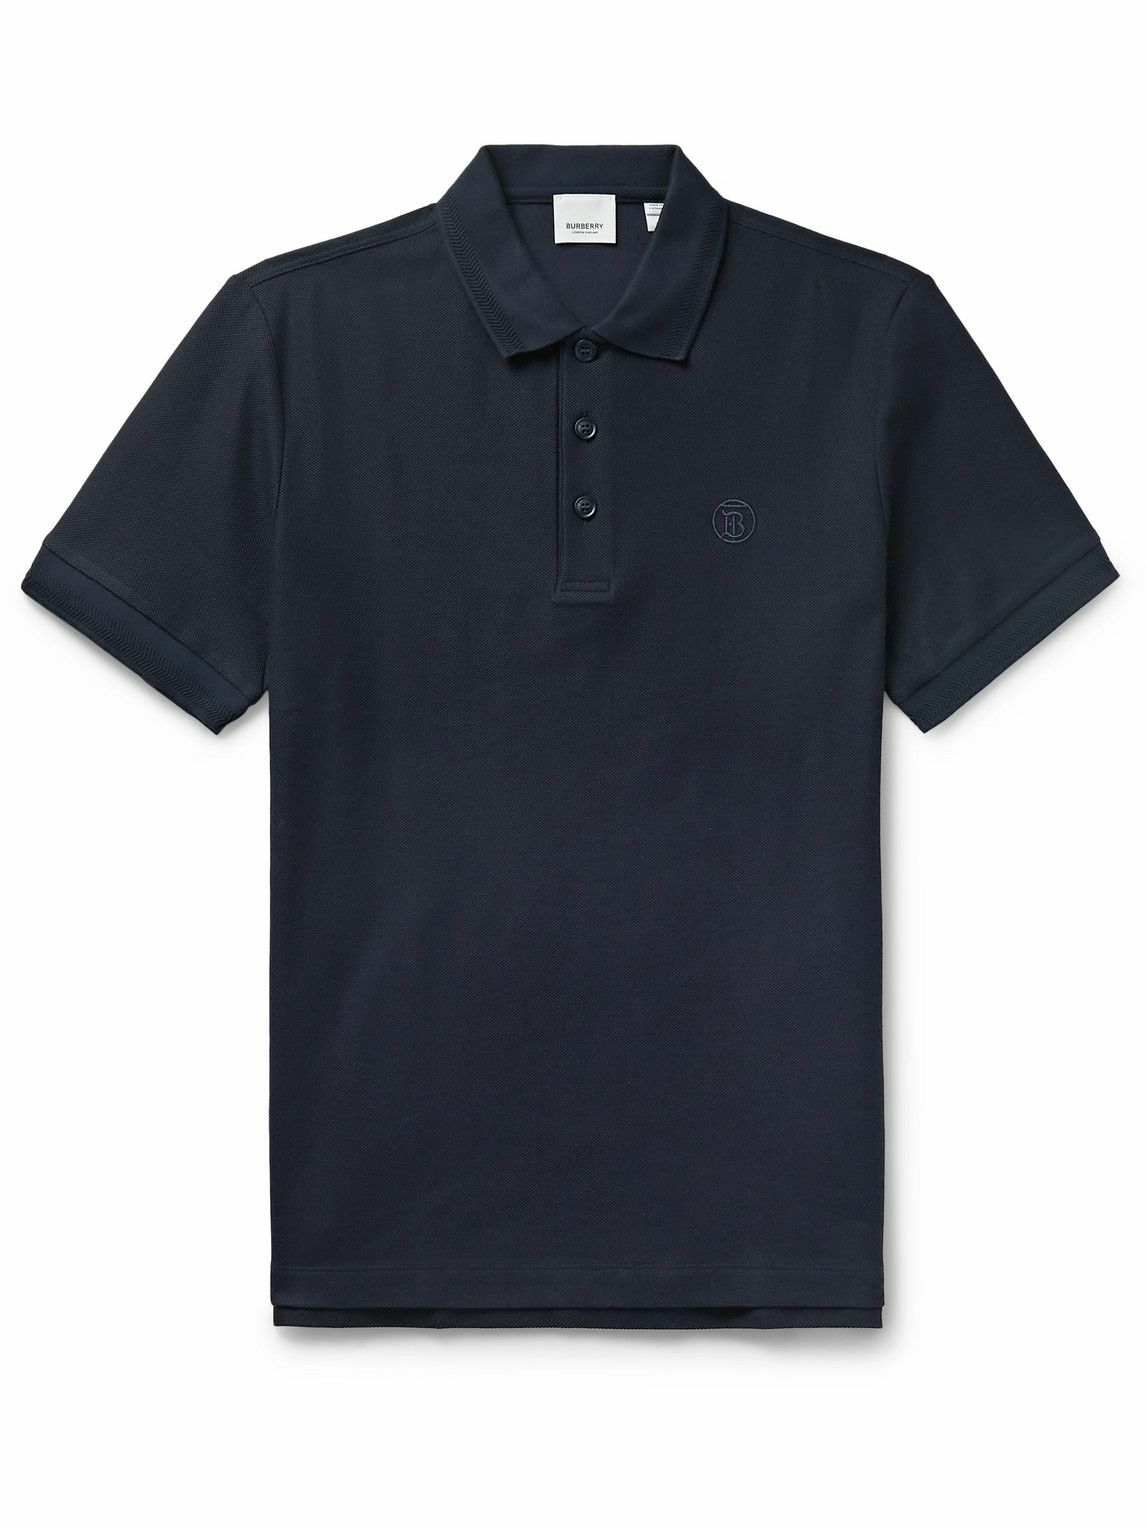 Burberry - Logo-Embroidered Cotton-Piqué Polo Shirt - Blue Burberry